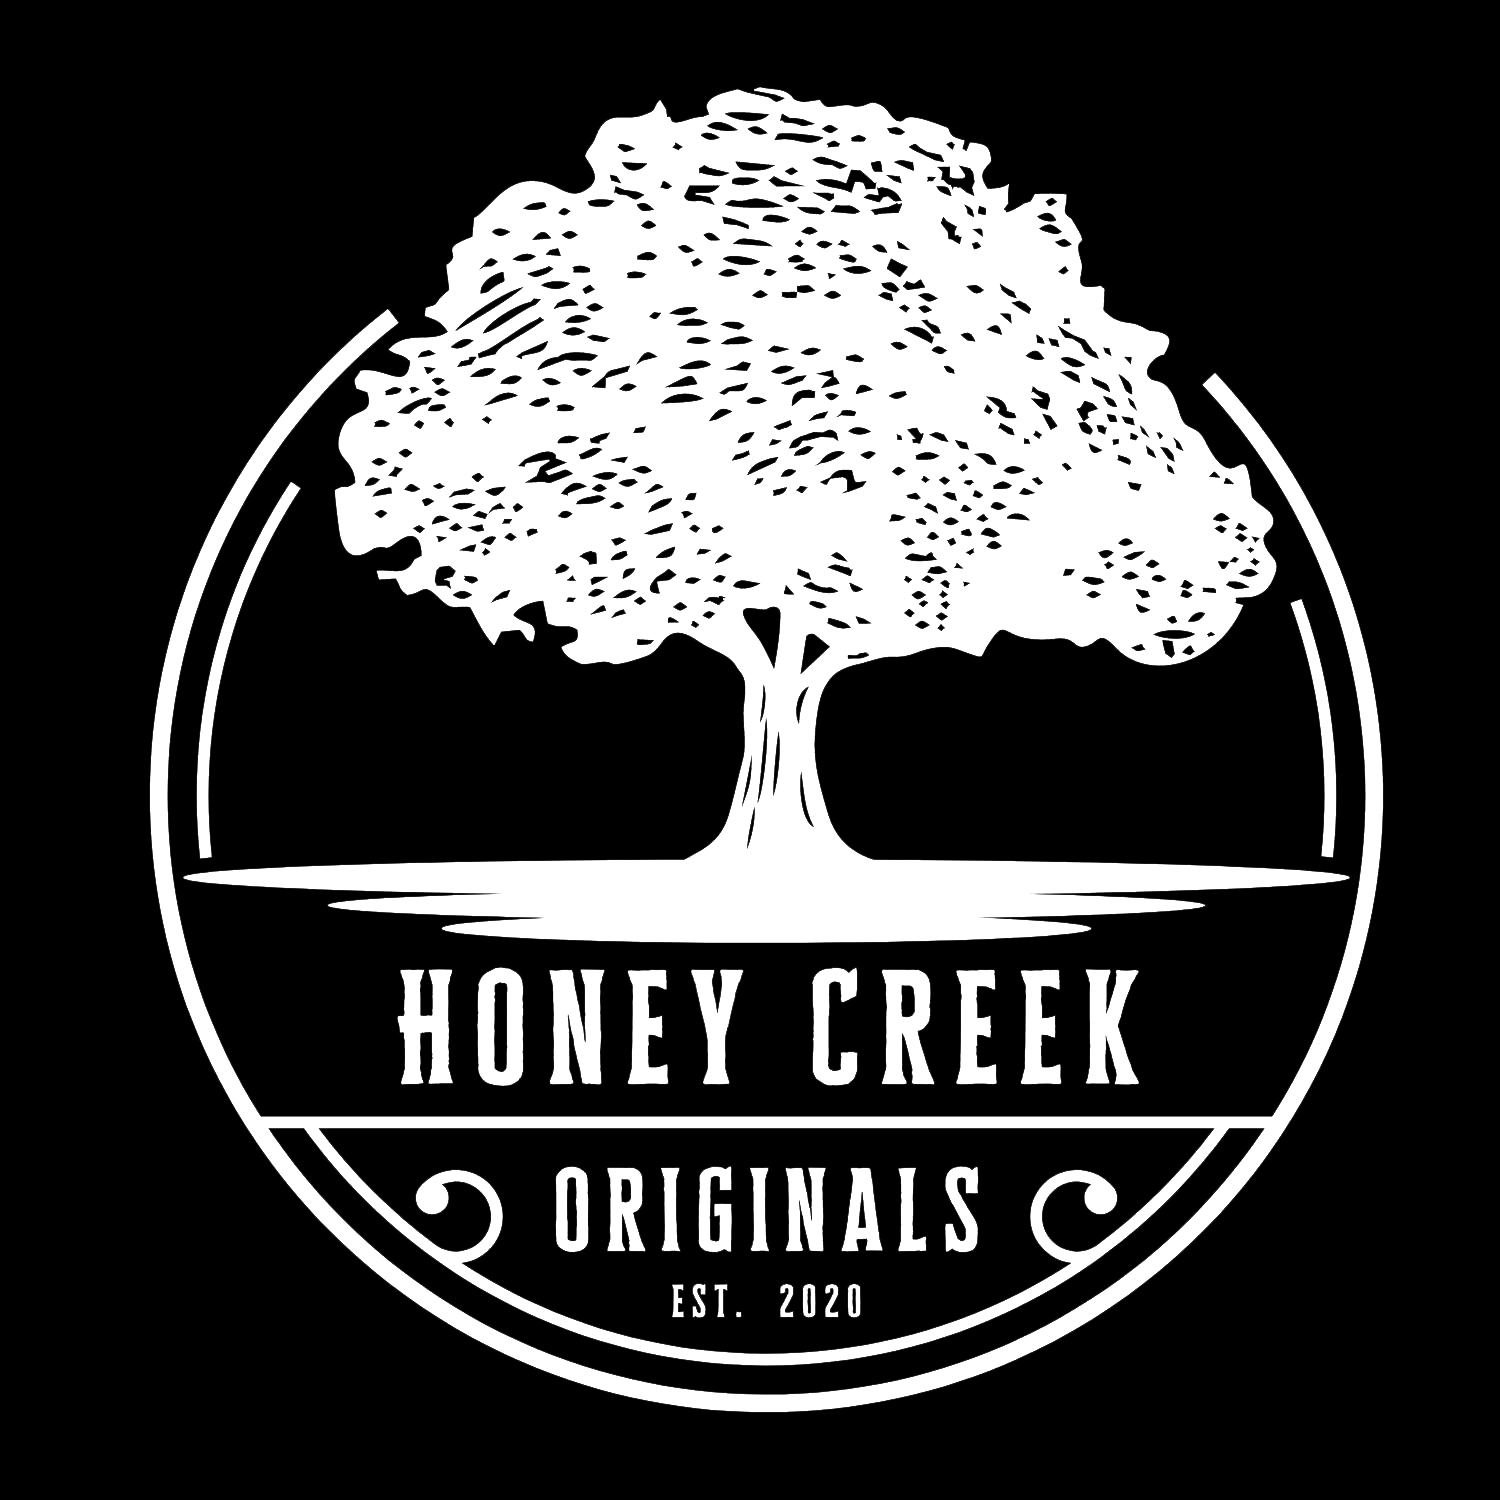 Honey Creek Originals